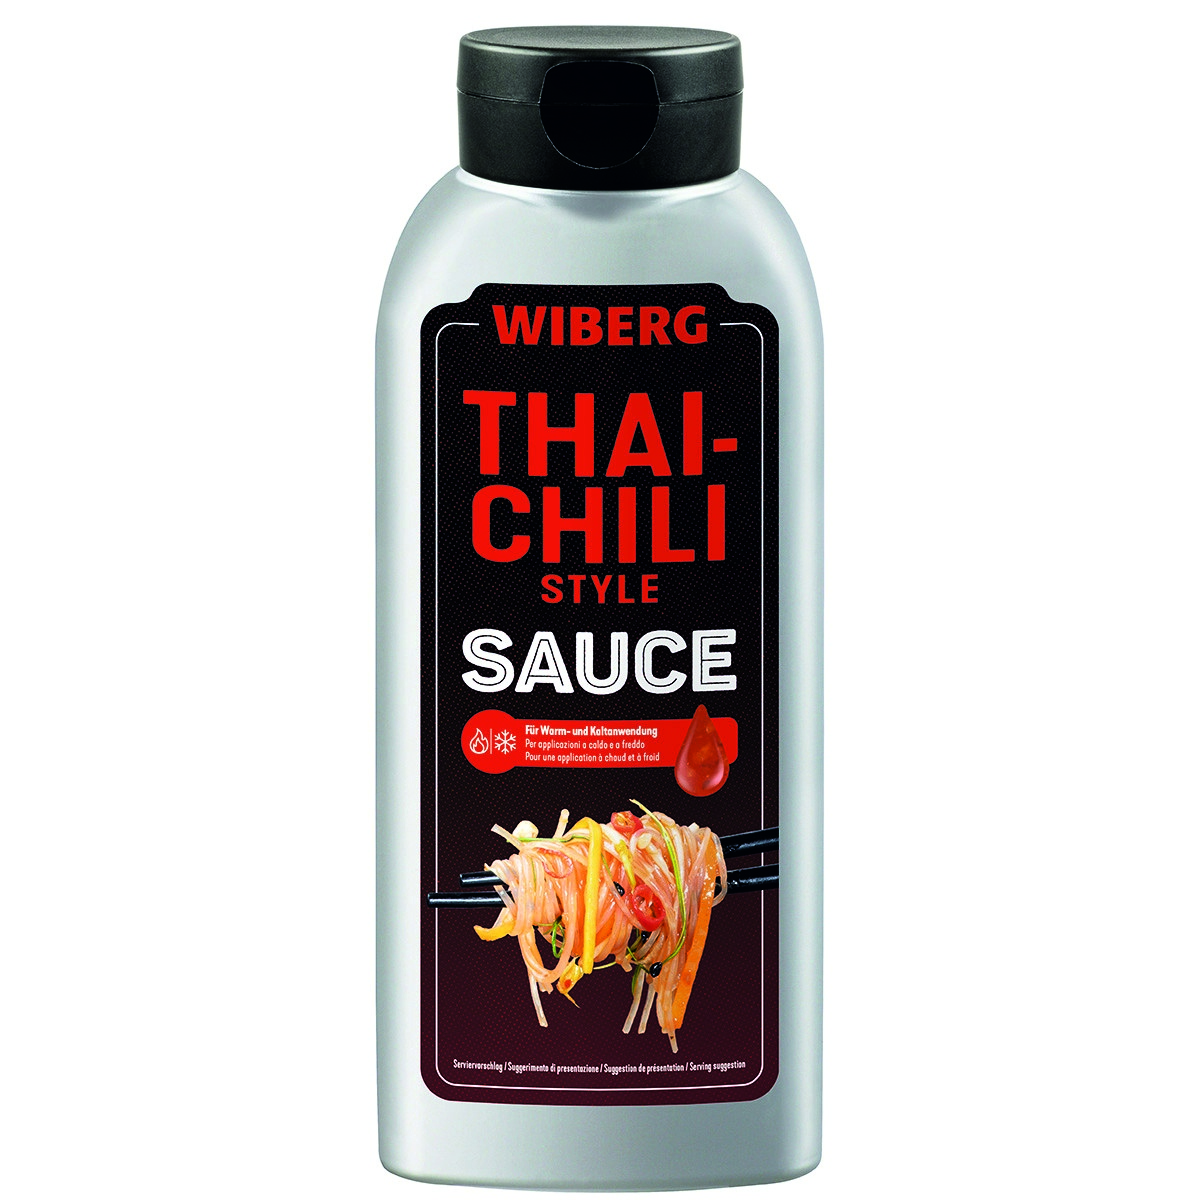 Thai-Chili Style Sauce